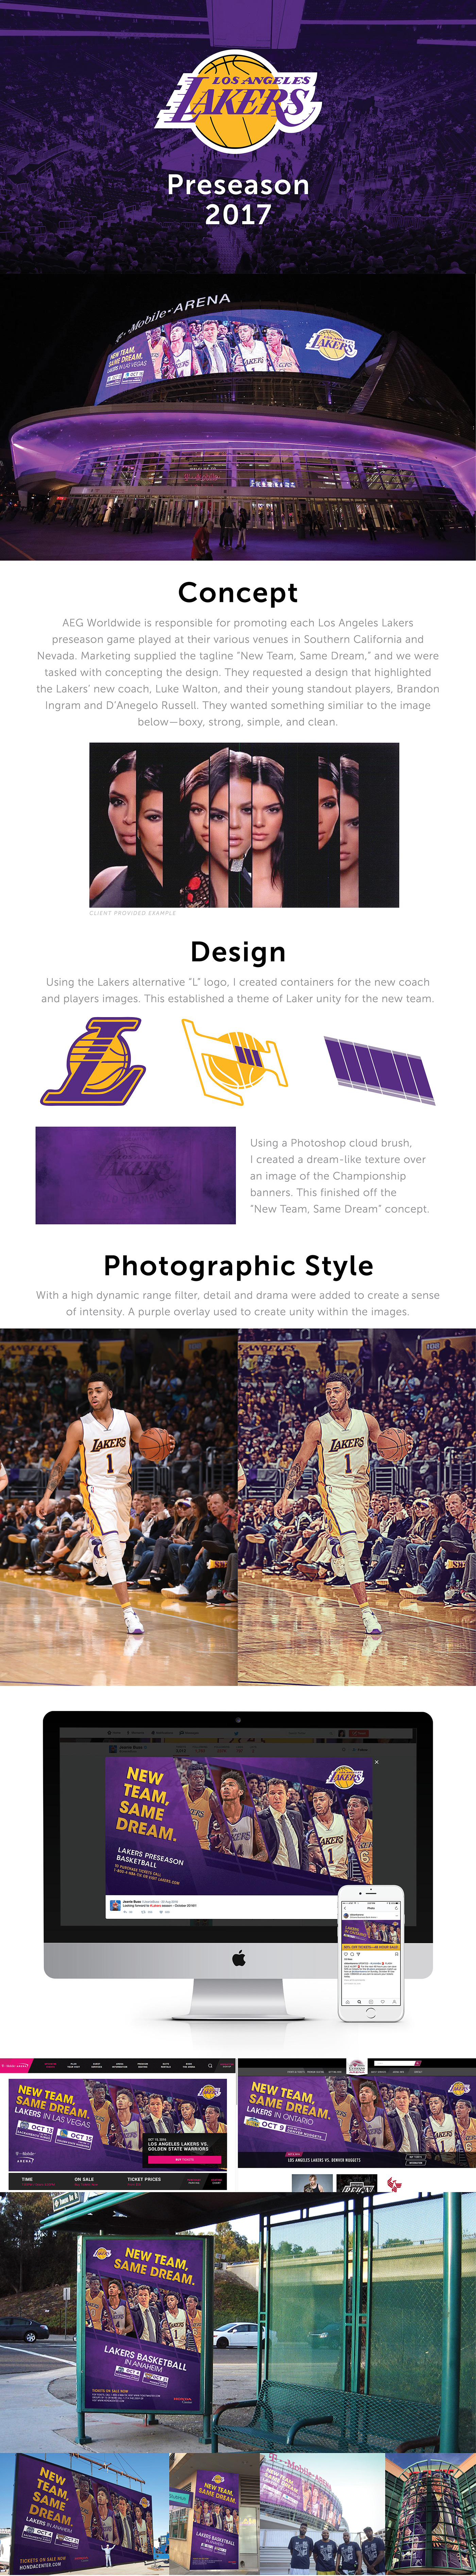 Los Angeles Lakers basketball Preseason 2017 Sports Design